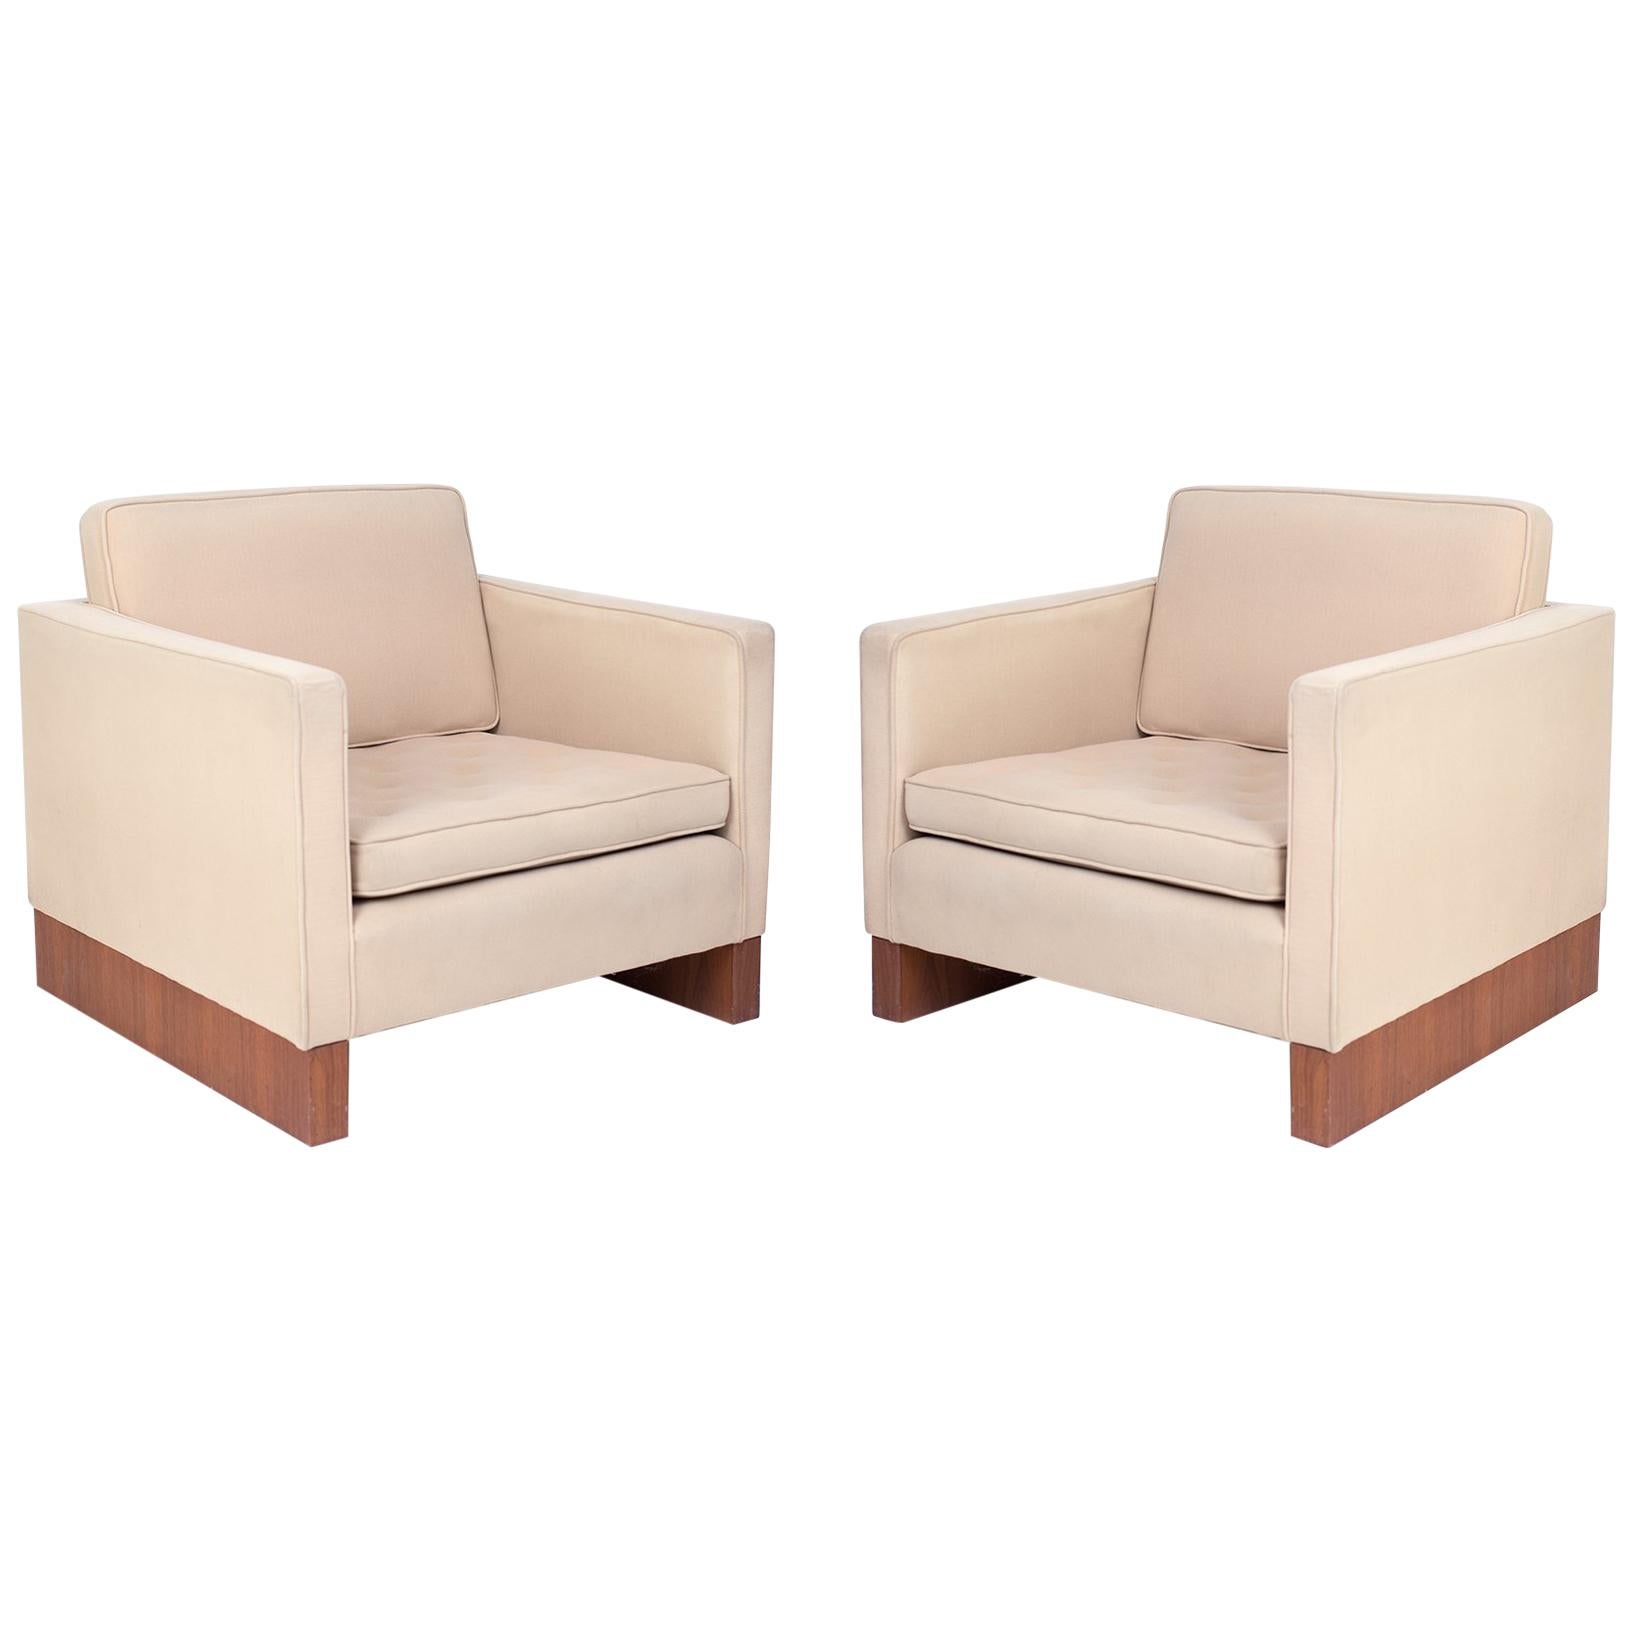 Ludwig Mies Van der Rohe Knoll Lounge Chairs